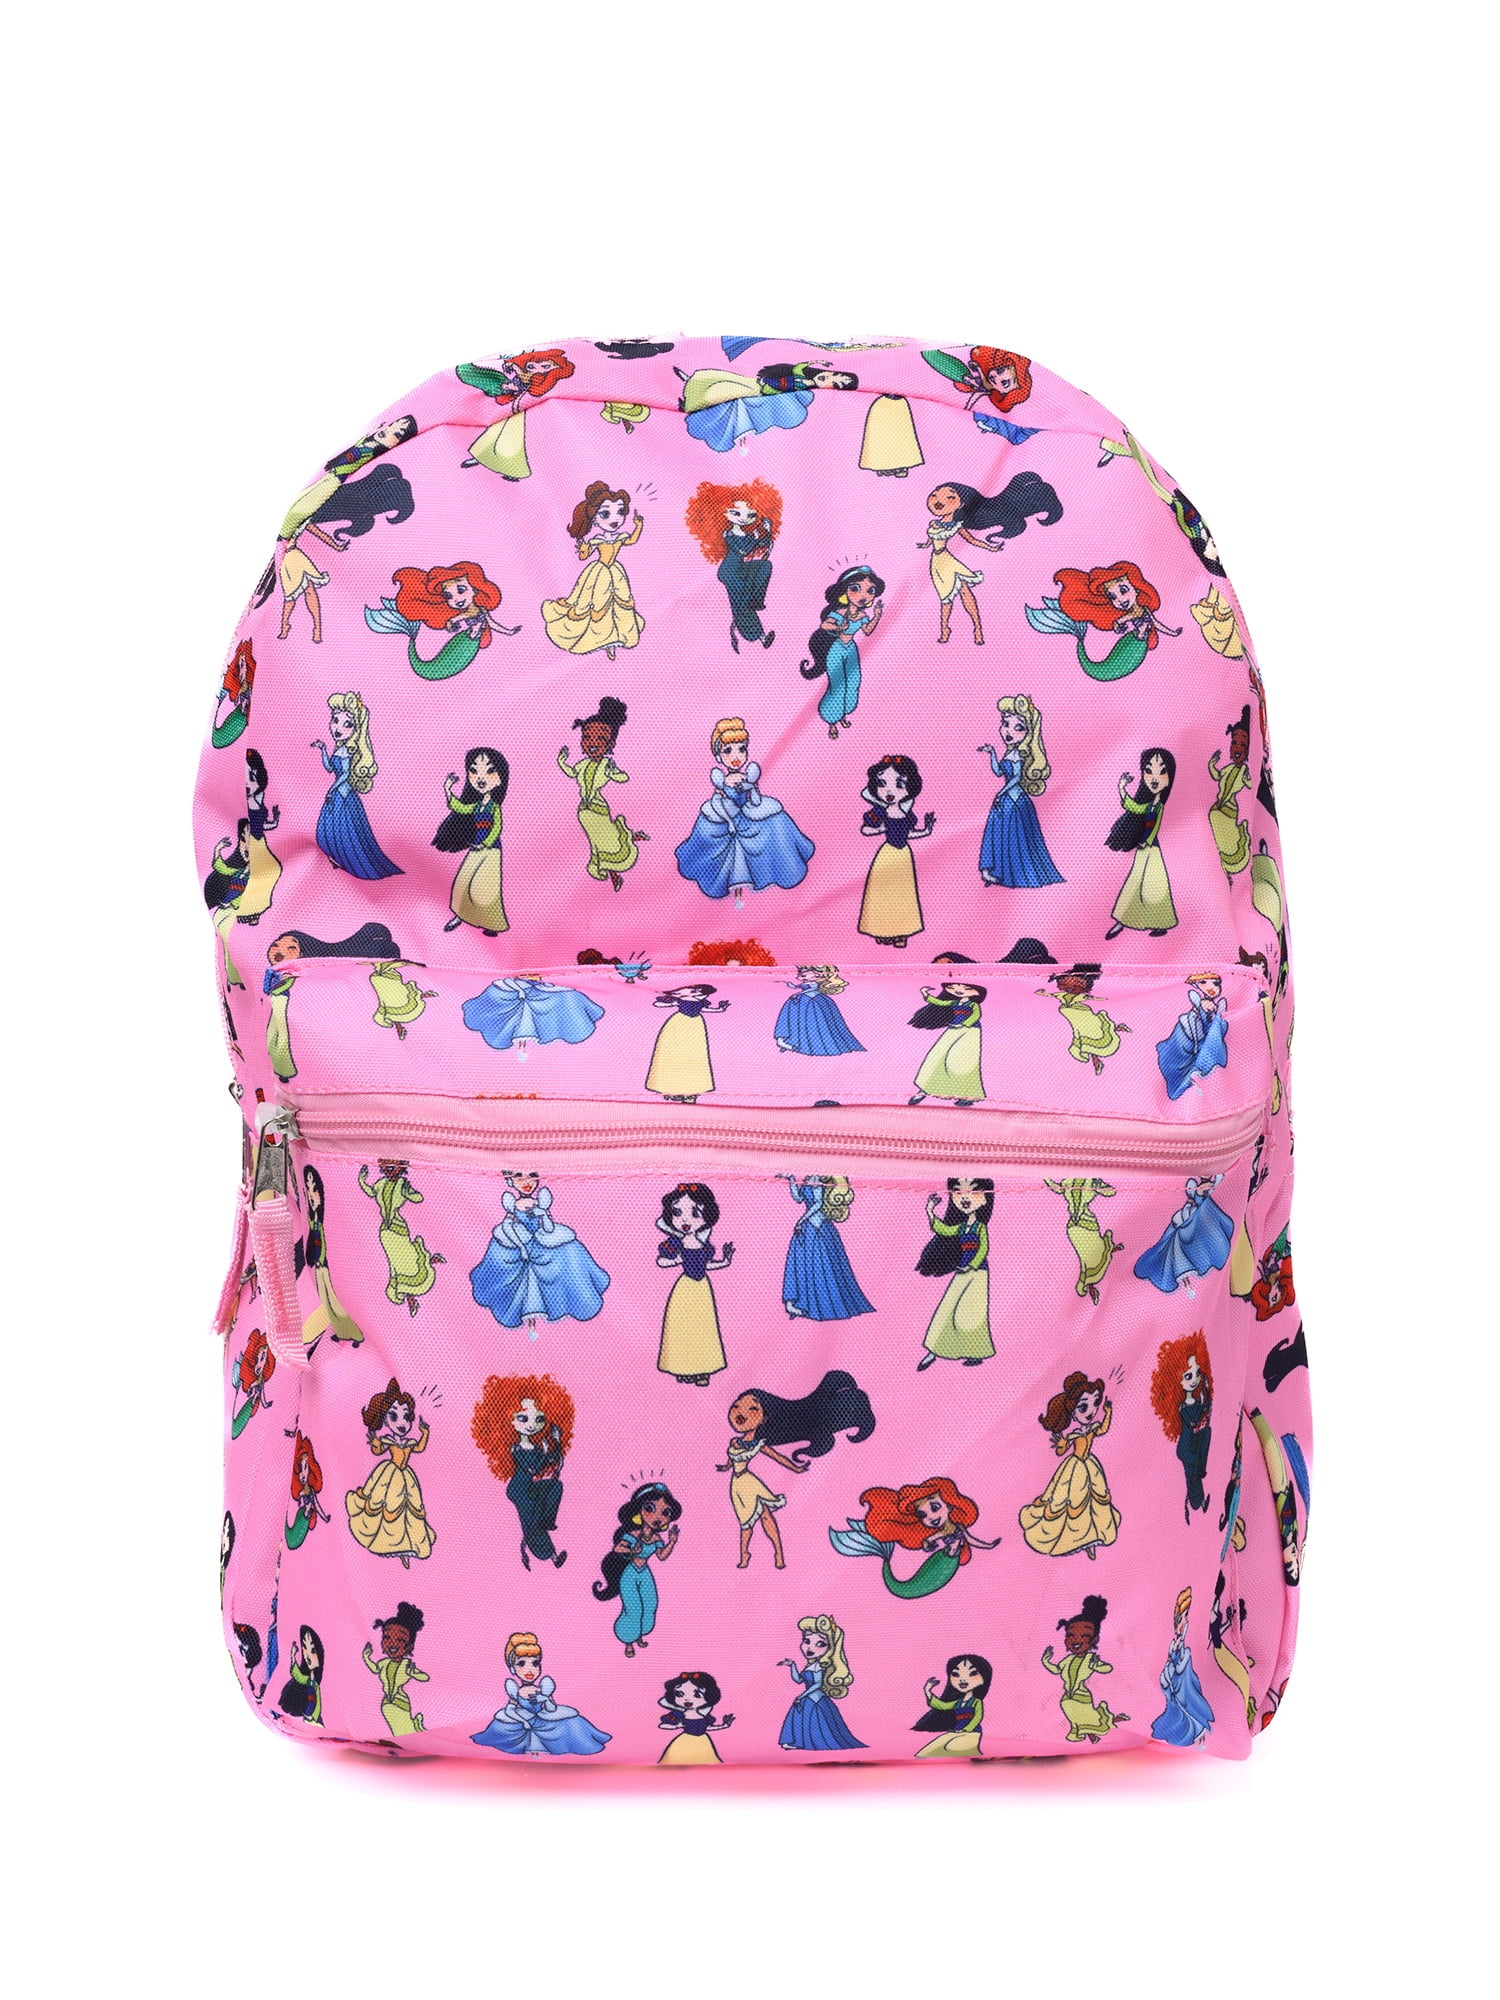 Disney Princesses Lunch Bag Insulated Ariel Cinderella Tiana Belle Girls Pink